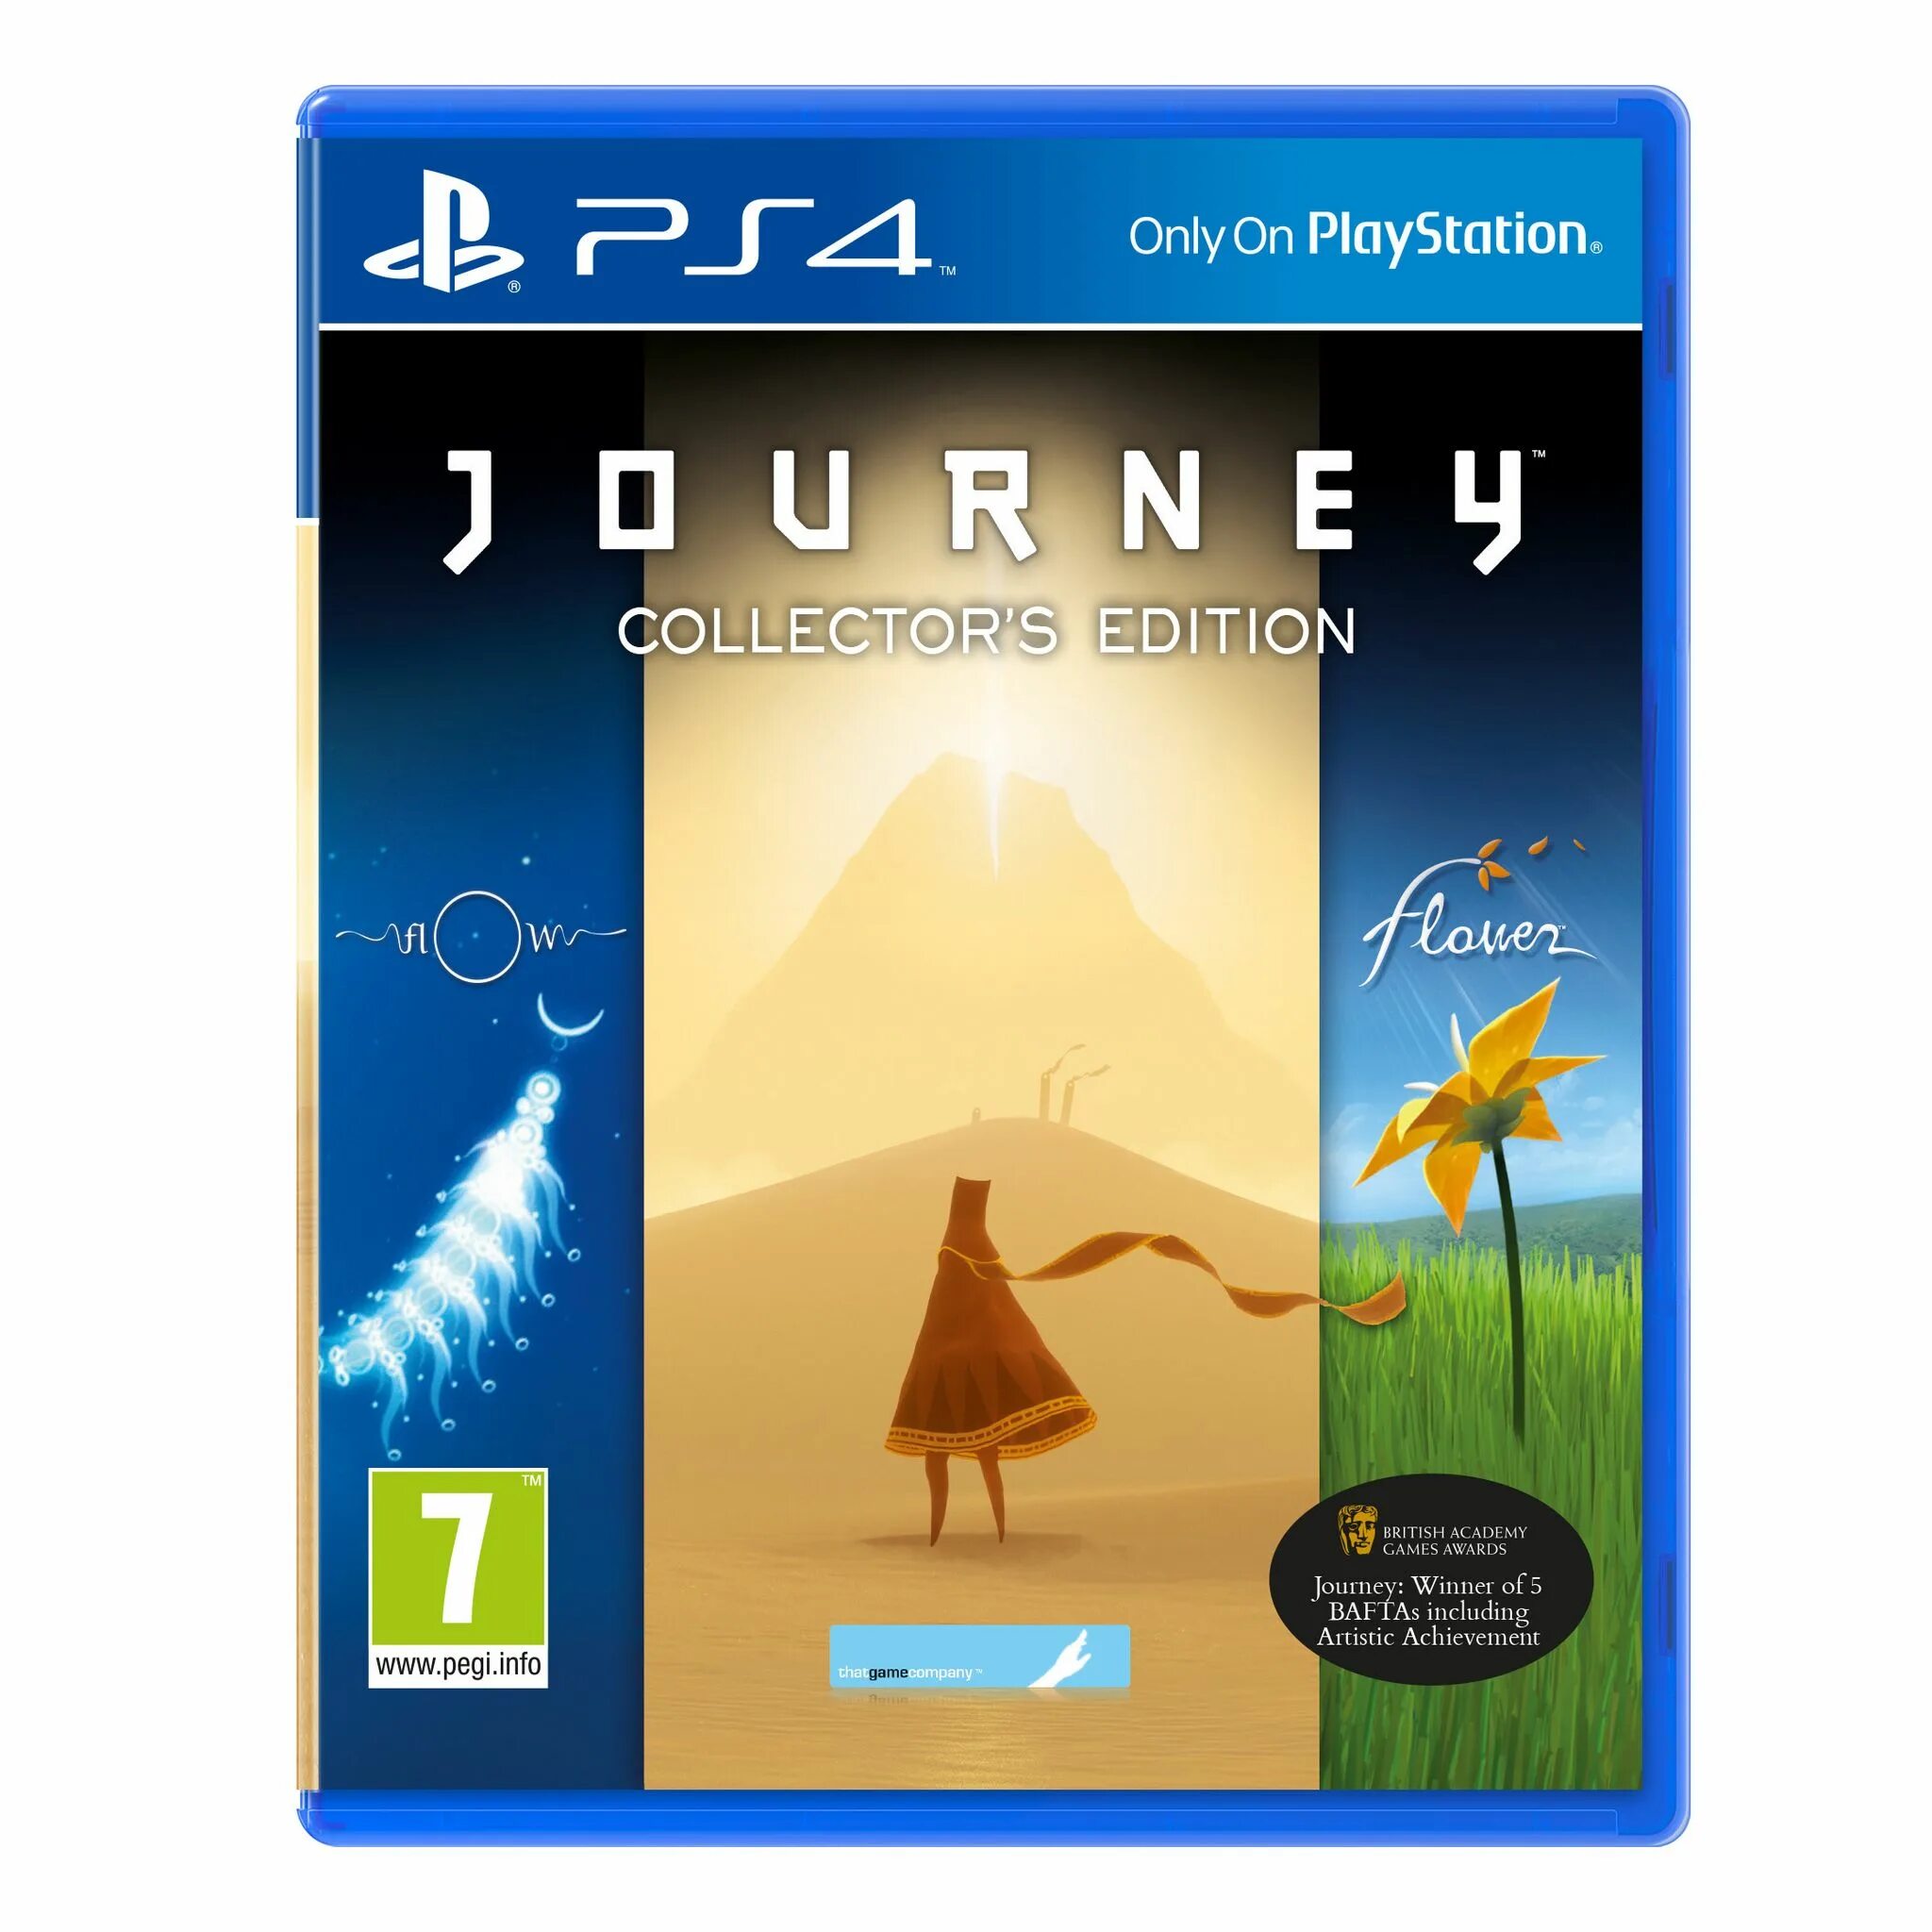 Journey цена. Игра путешествие ps4. Journey Collector's Edition ps3. Путешествие коллекционное издание ps3. Путешествие коллекционное издание Sony ps4.